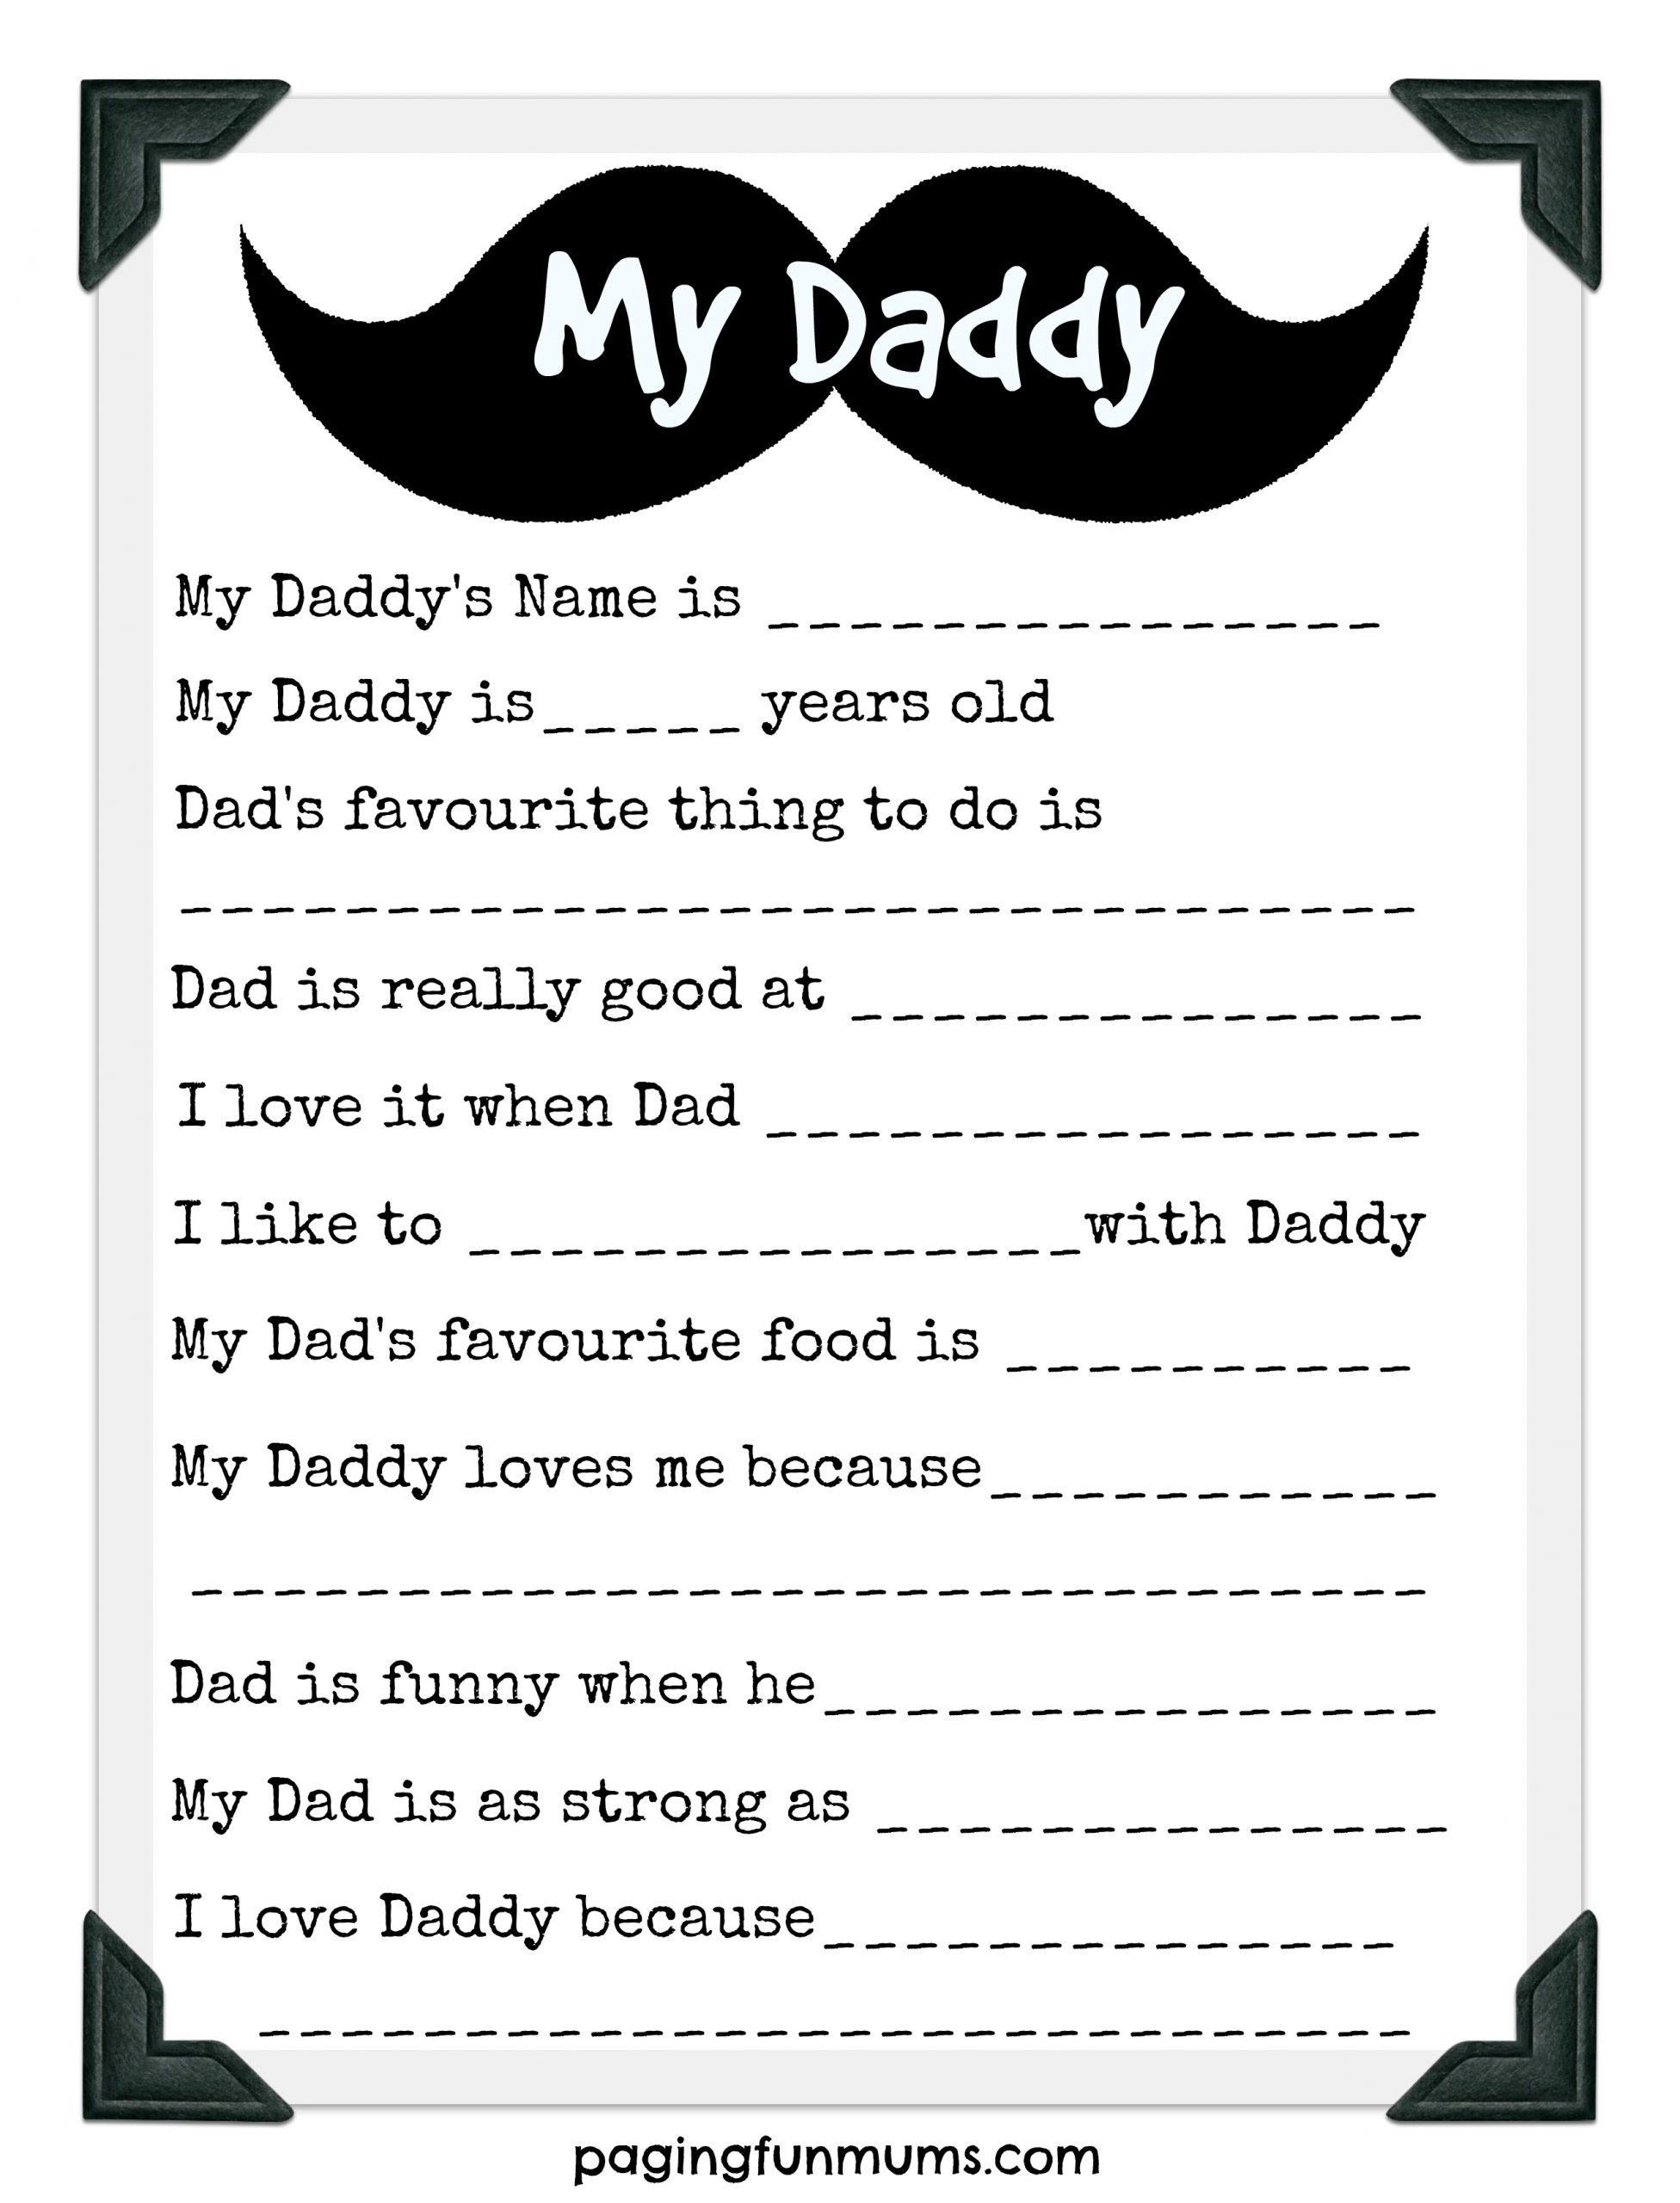 Dad Questionnaire Printable